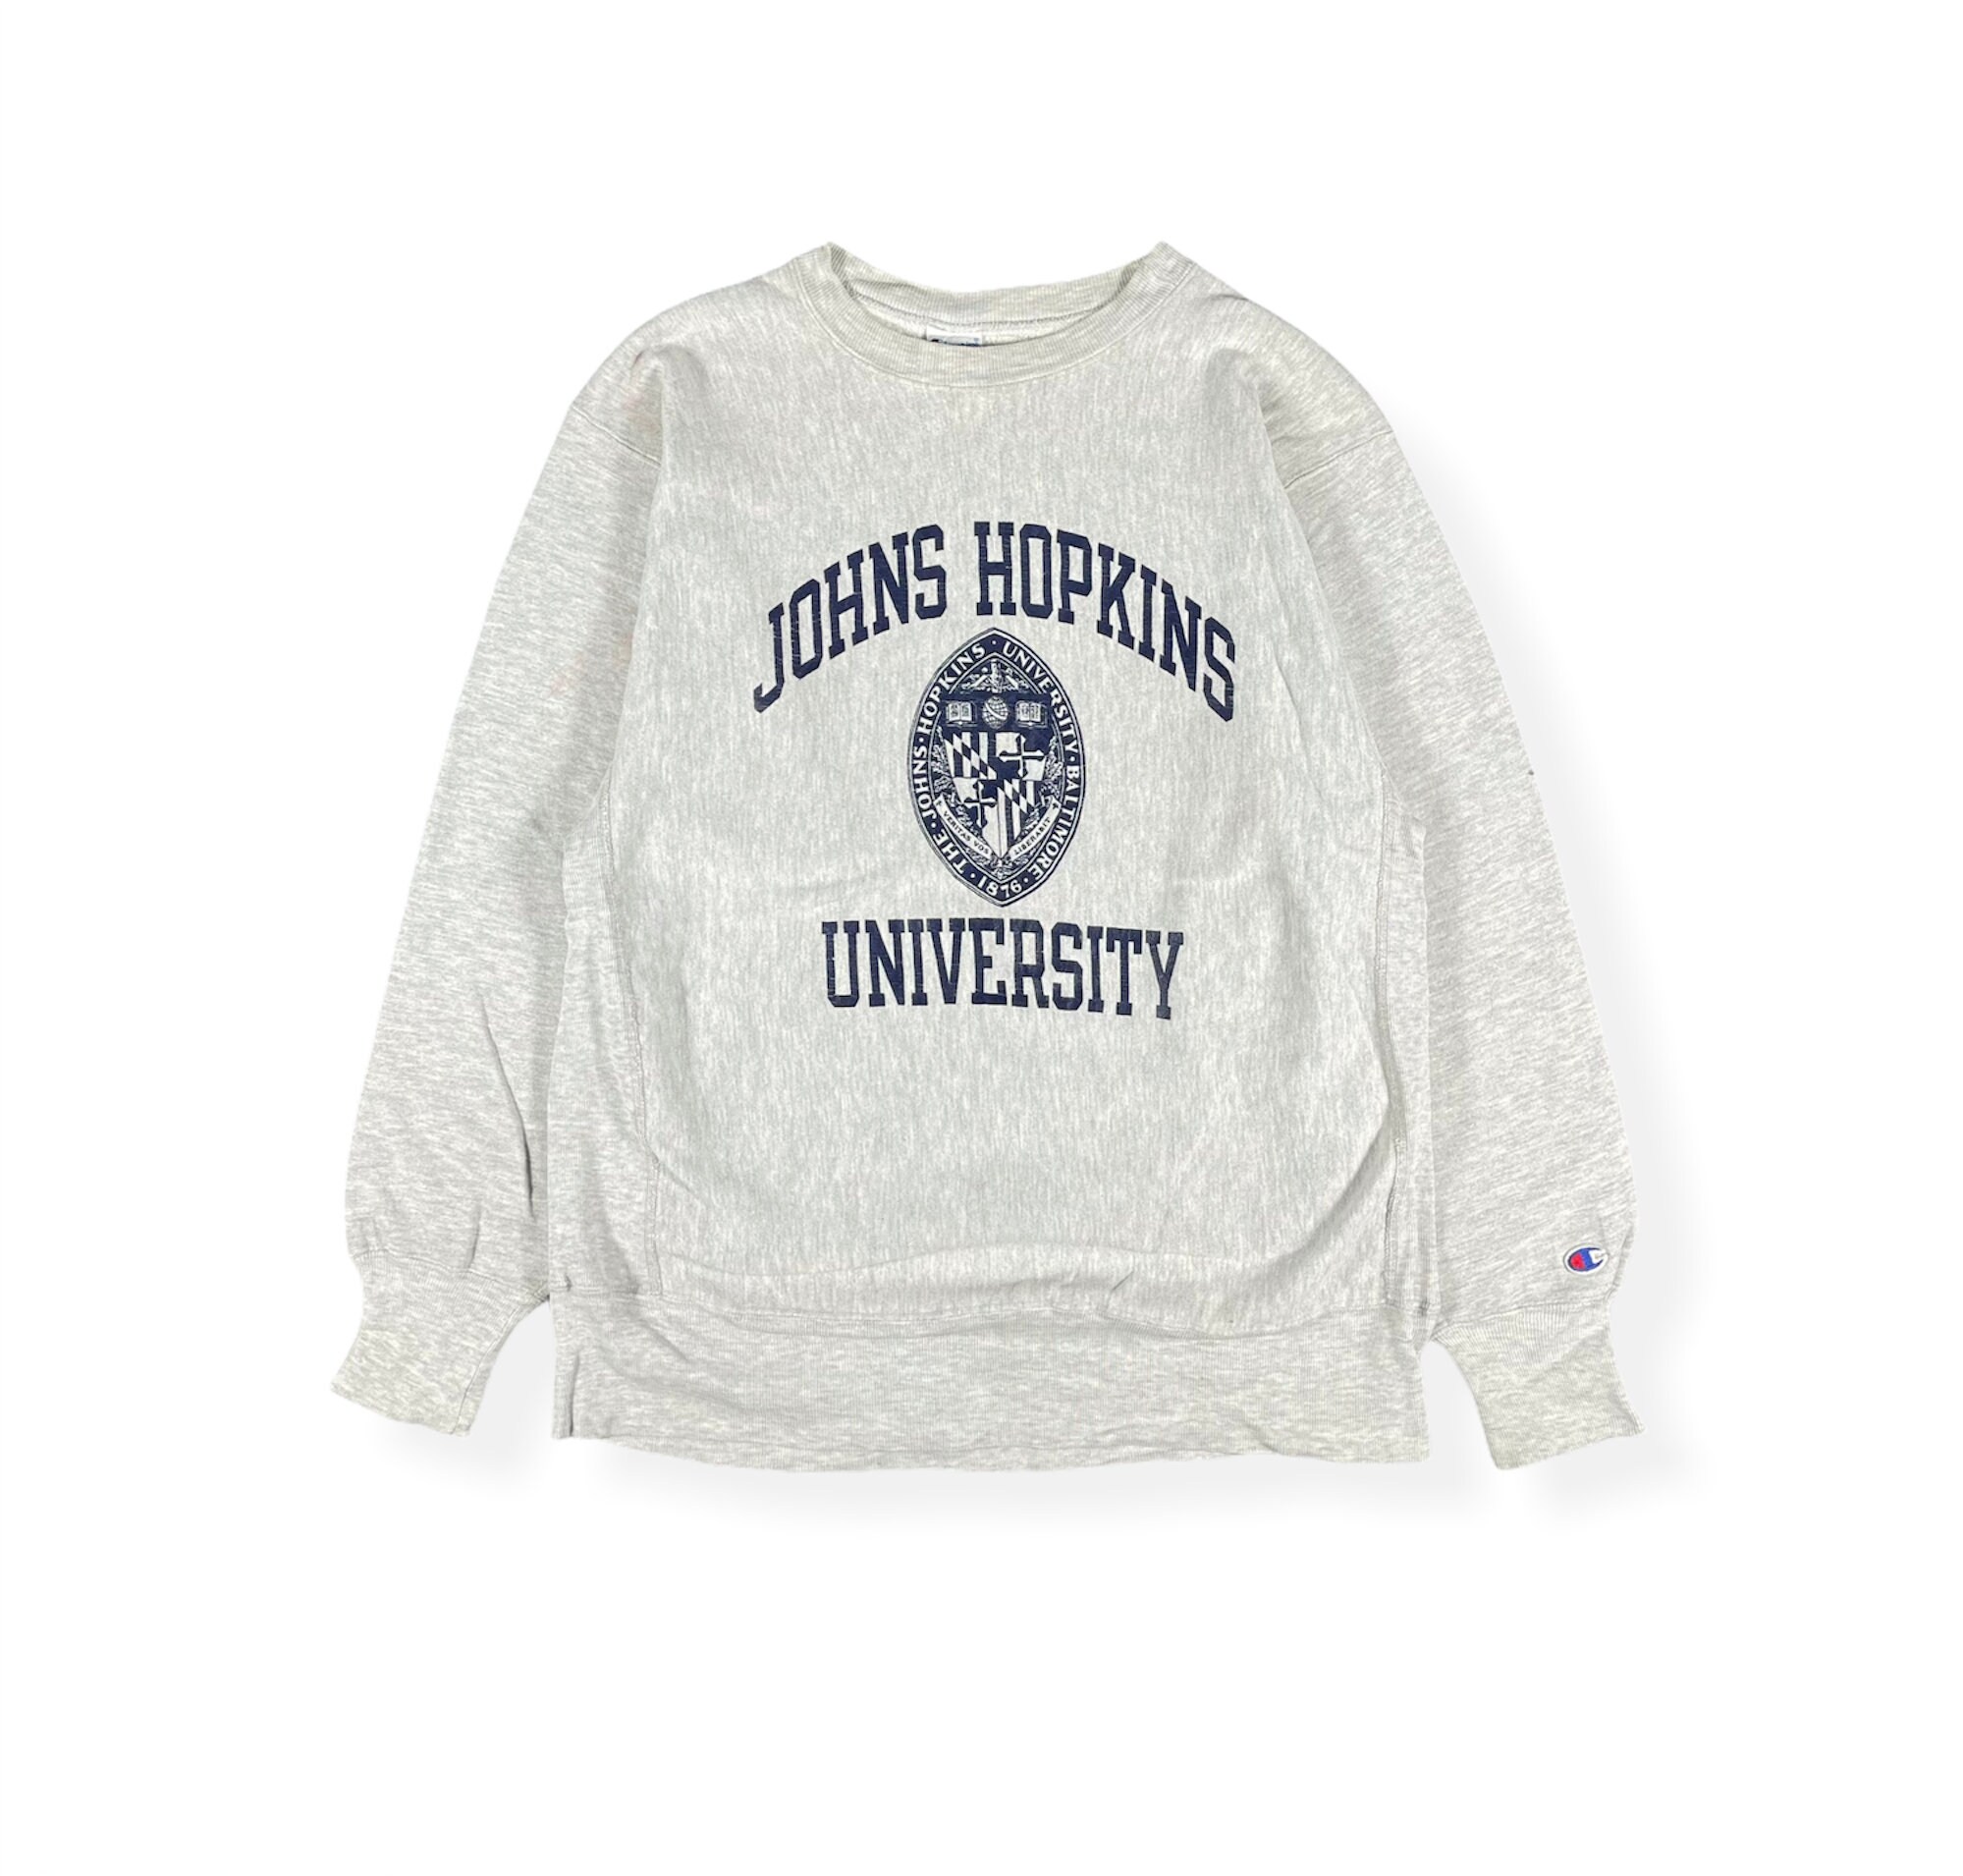 Vintage Champion Johns Hopkins University Sweater XL | Etsy